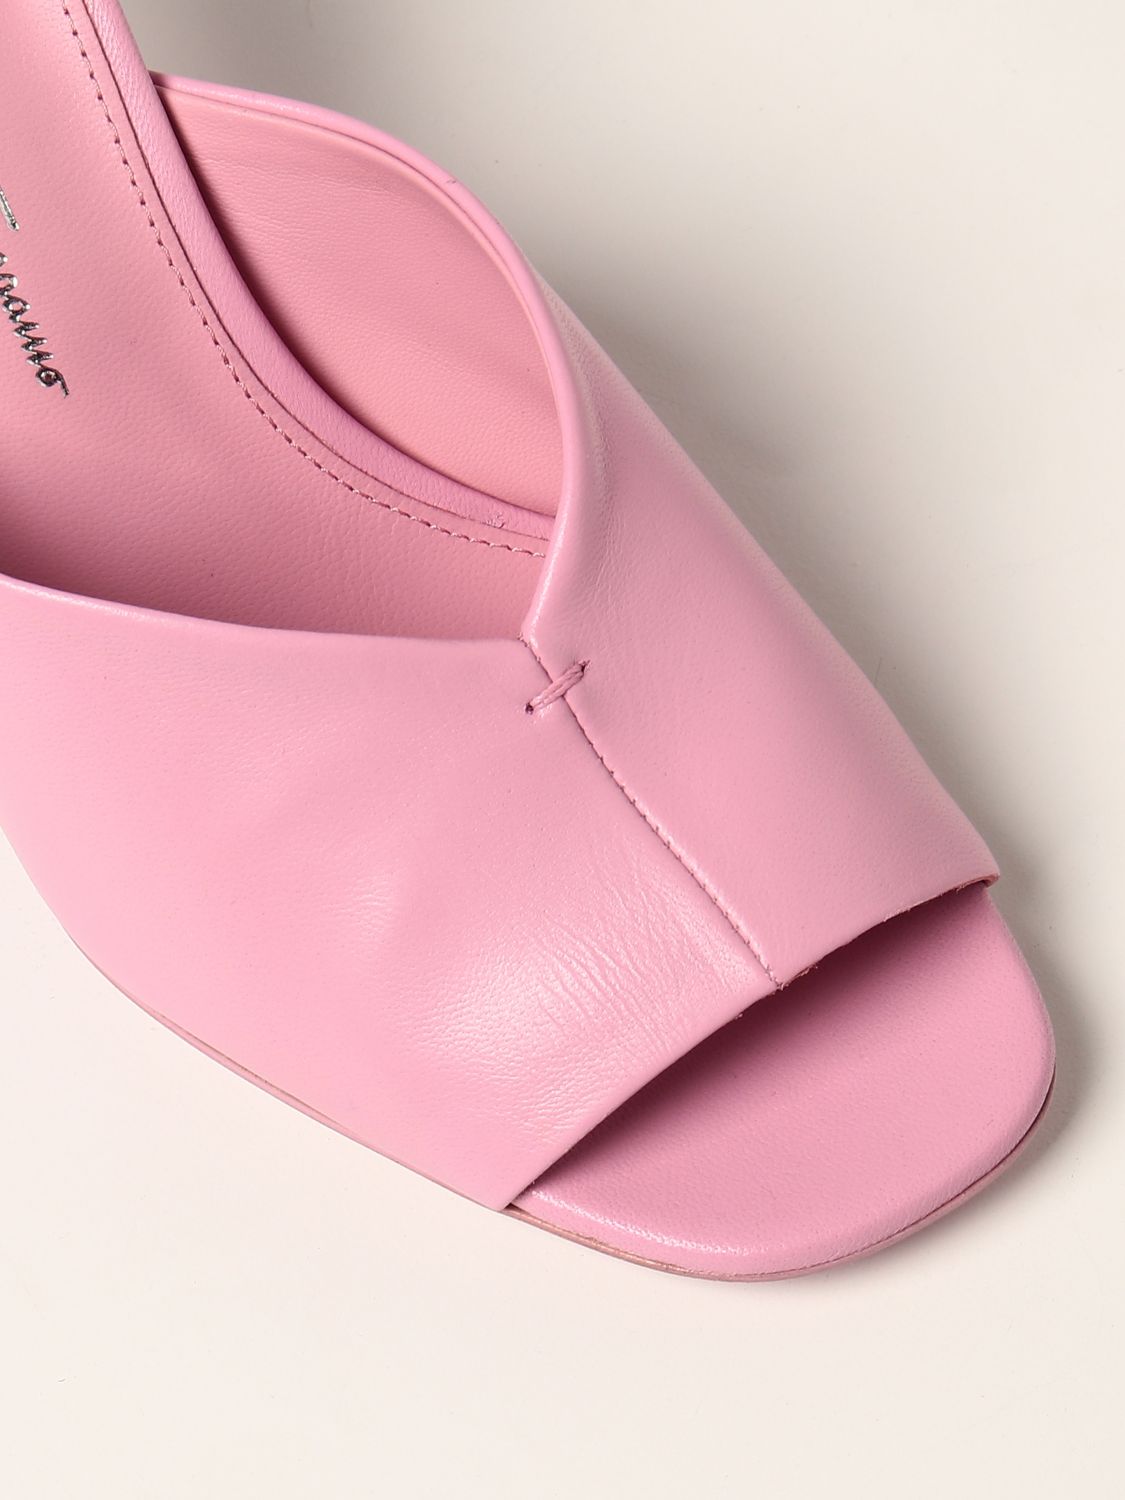 Босоножки на каблуке Salvatore Ferragamo: Обувь Женское Salvatore Ferragamo розовый 5